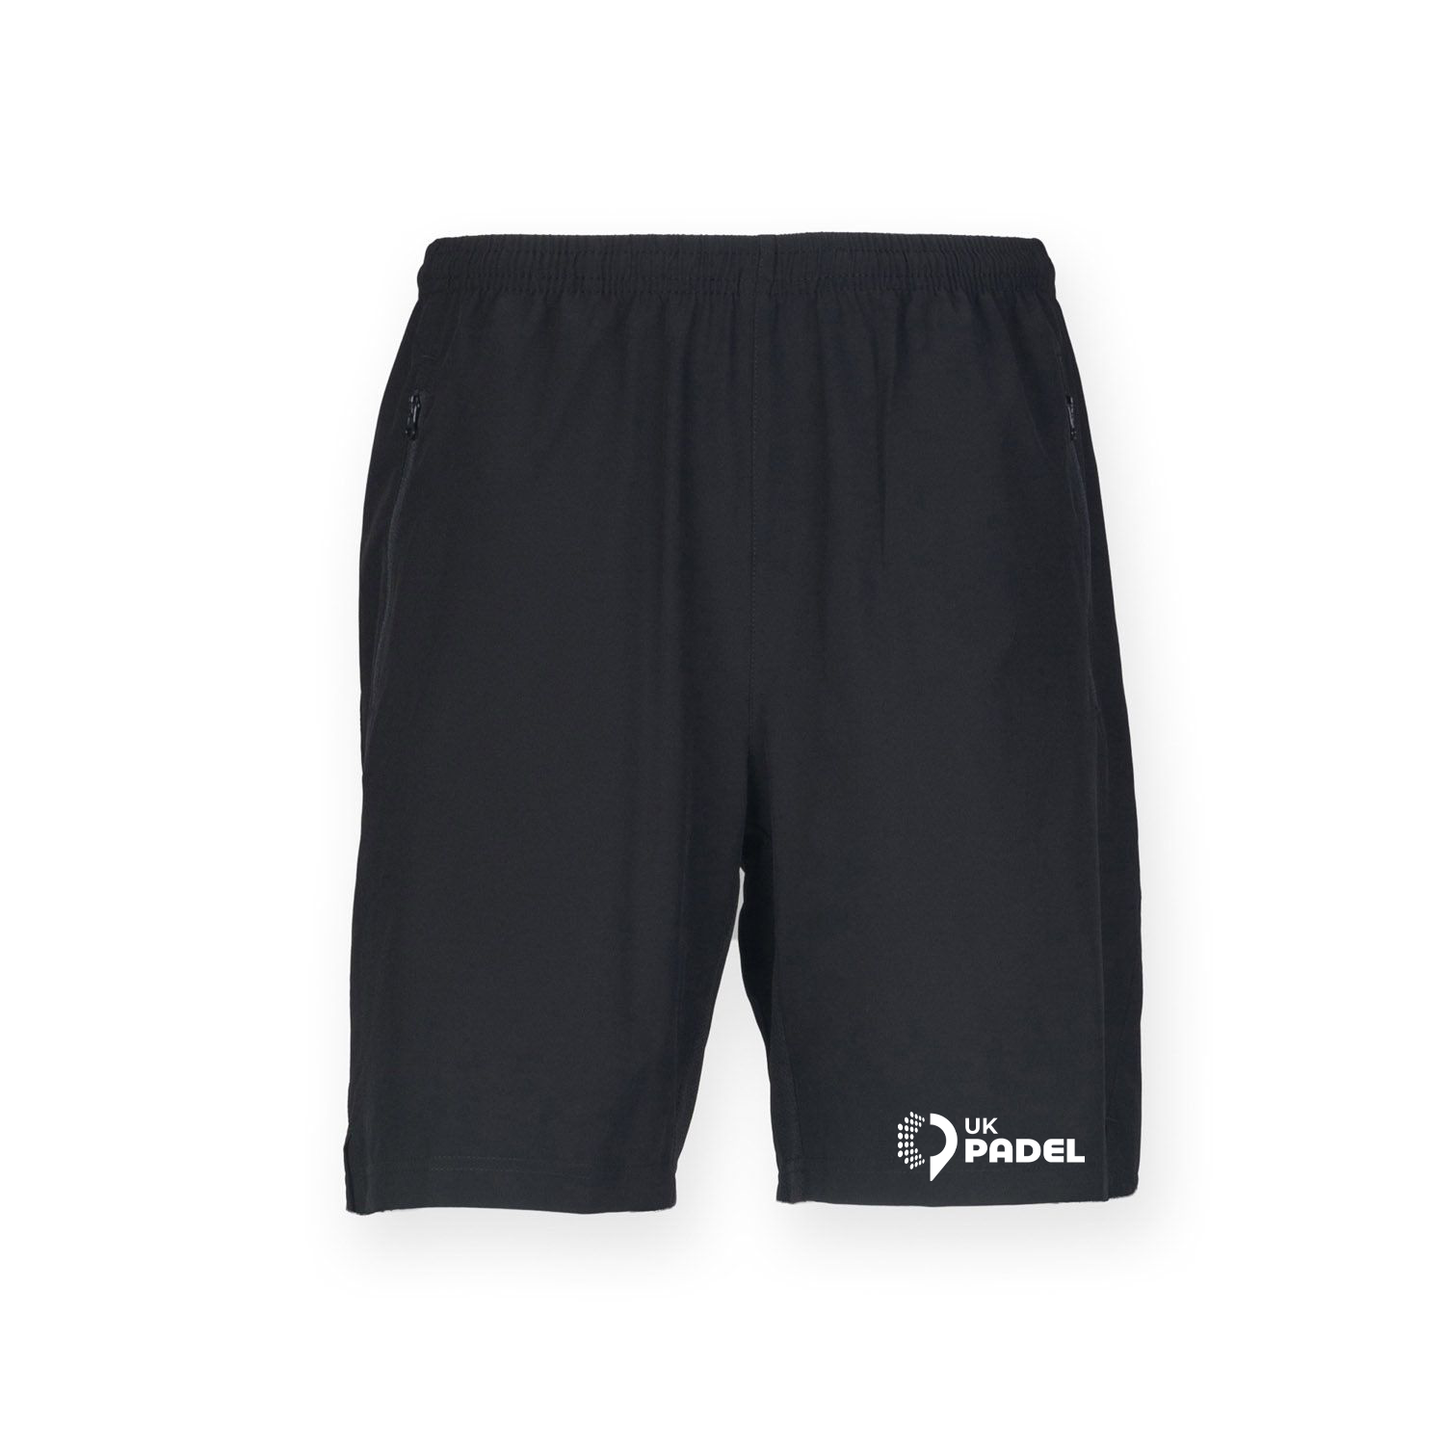 UK Padel Pro Strech Shorts